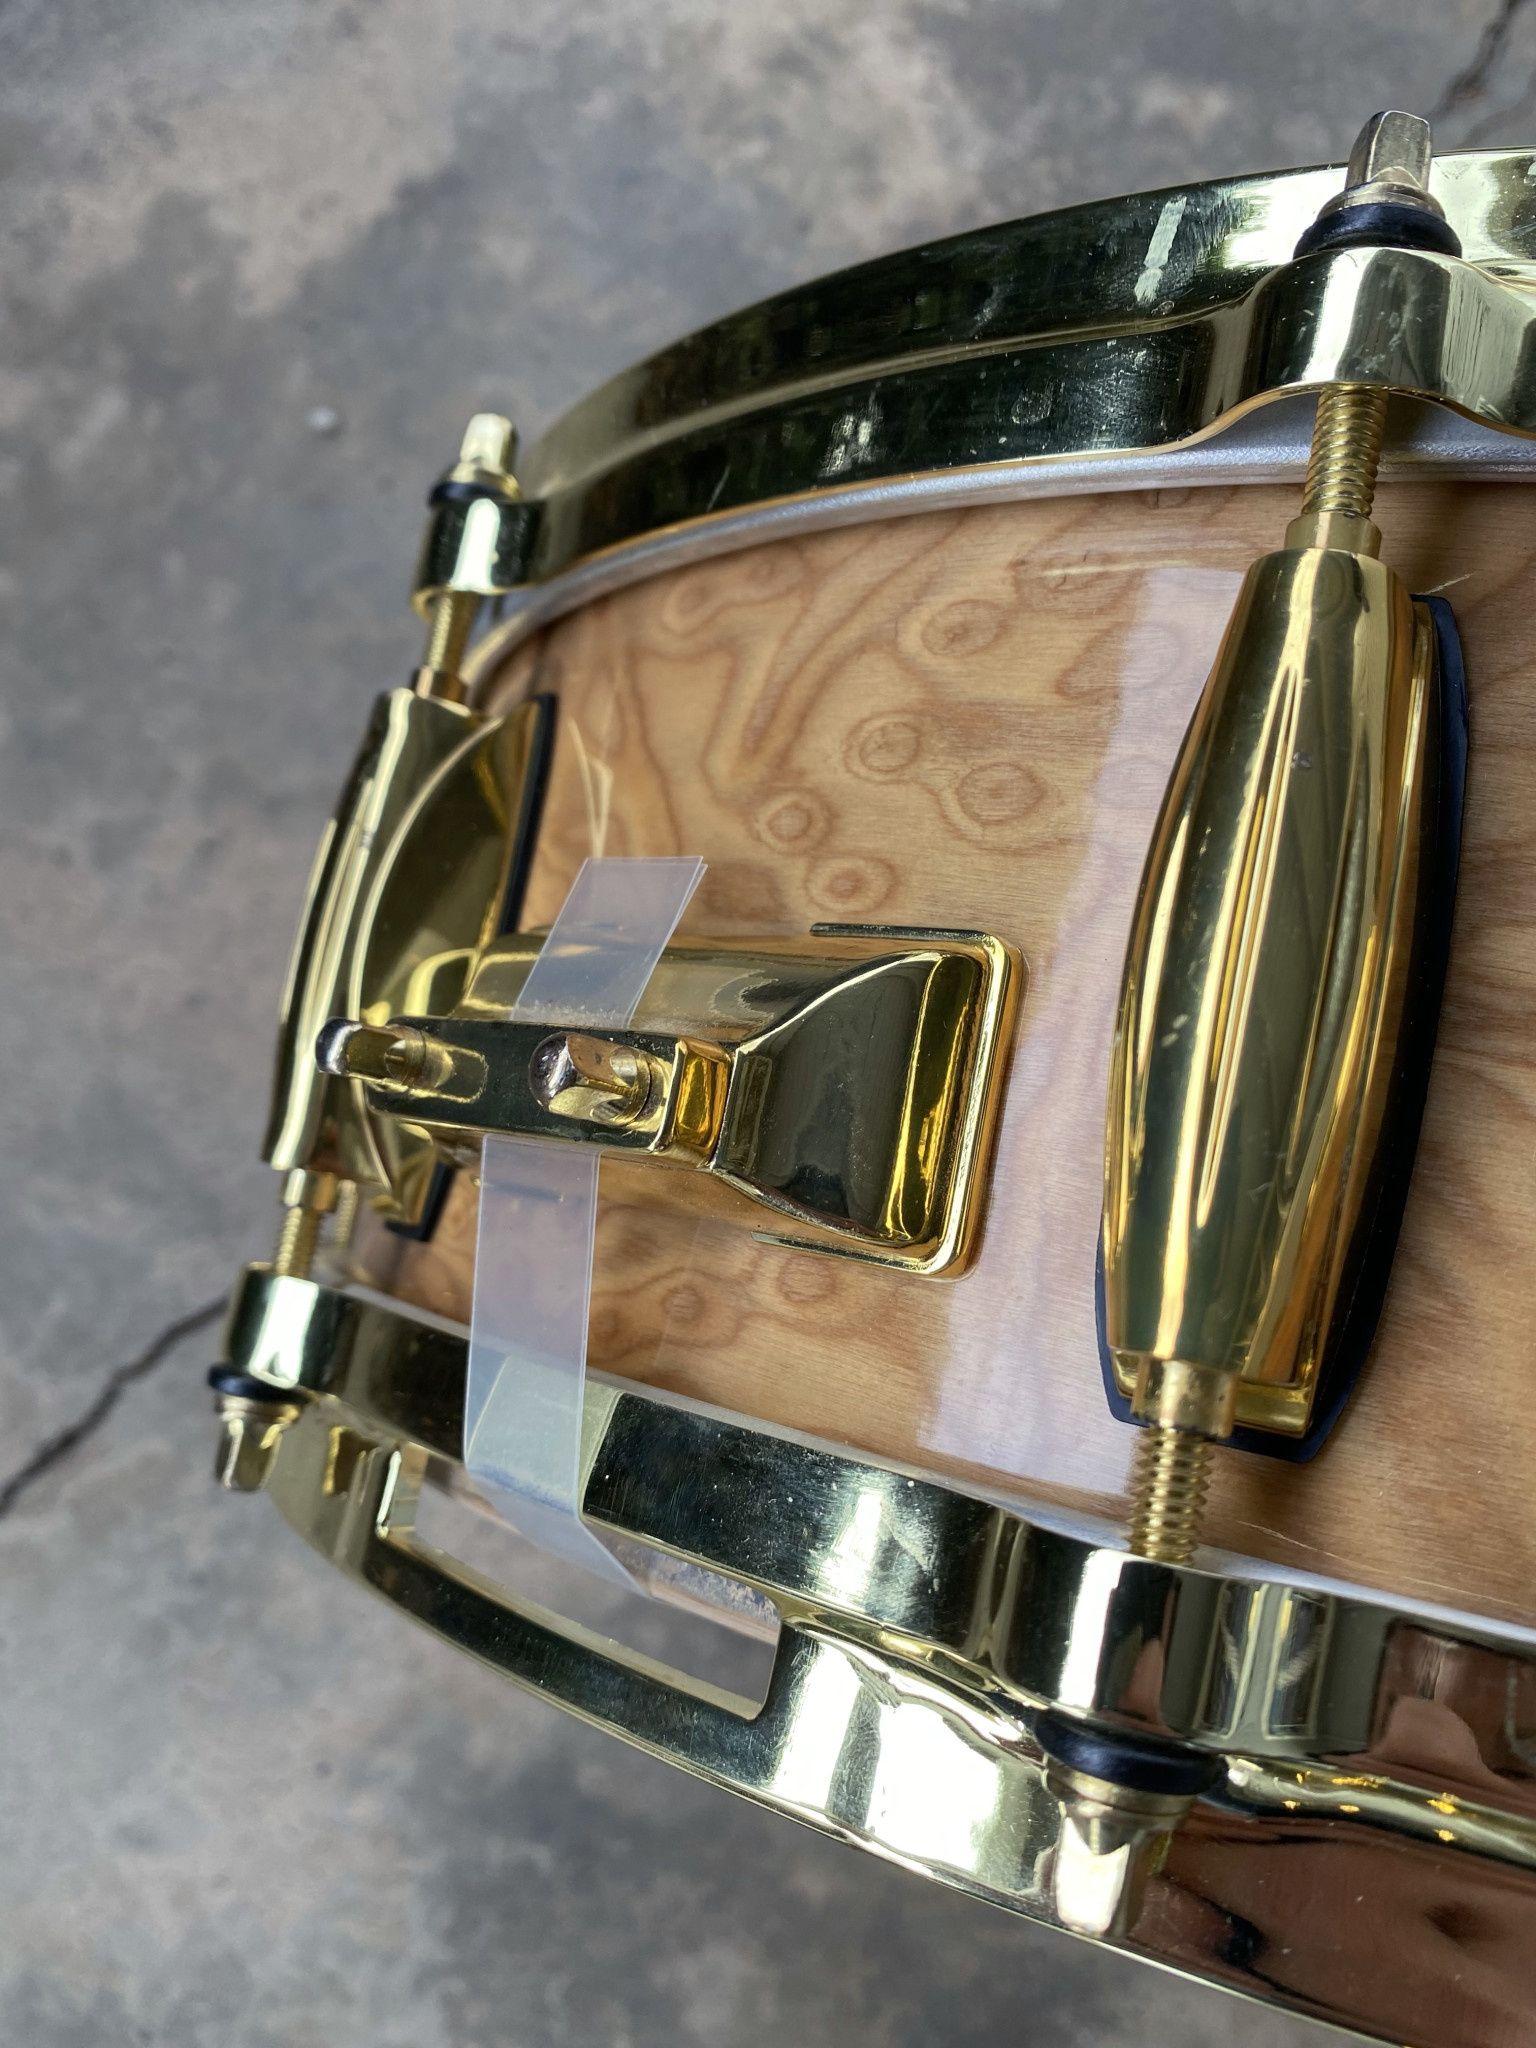 Restoration Help - Brass snare : r/drums